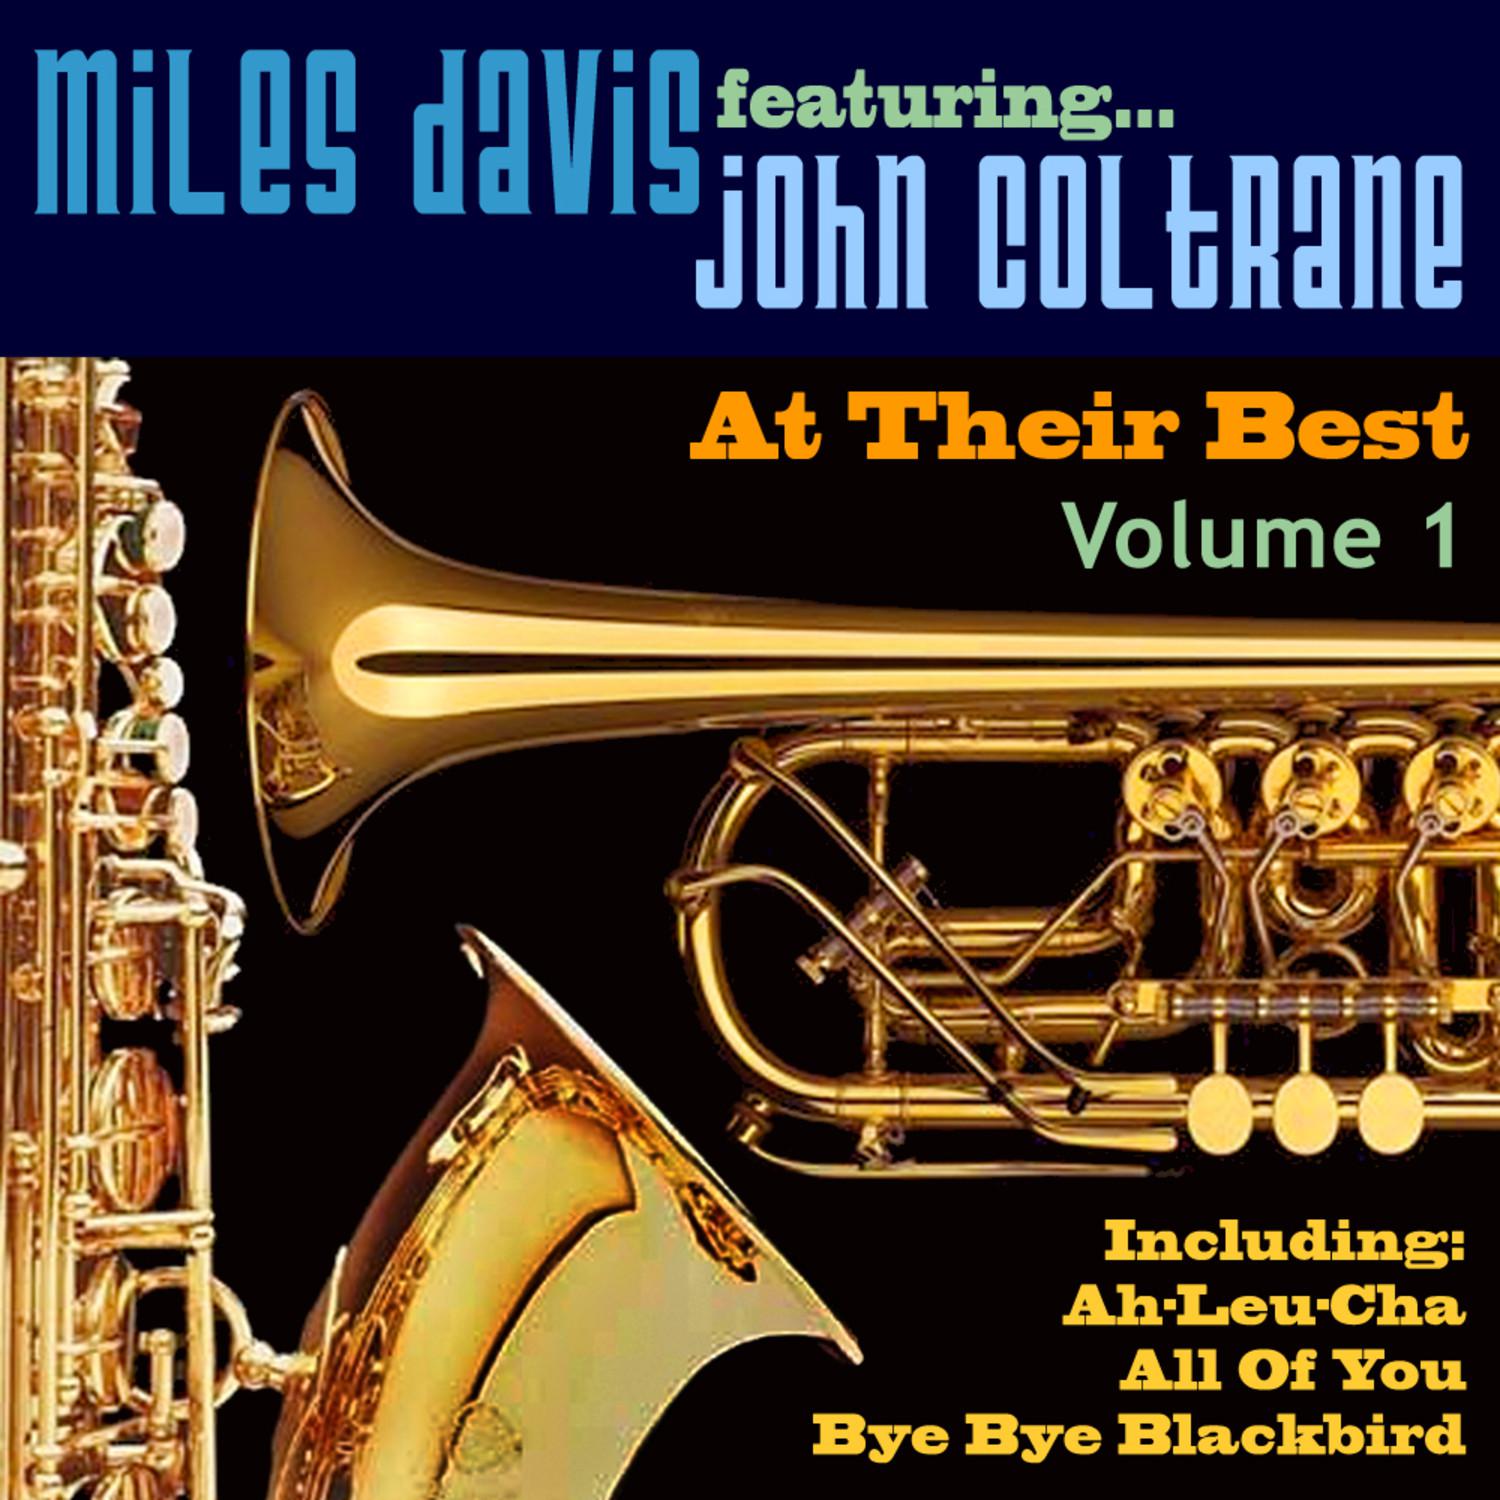 Miles Davis Feat John Coltrane - At Their Best Vol 1